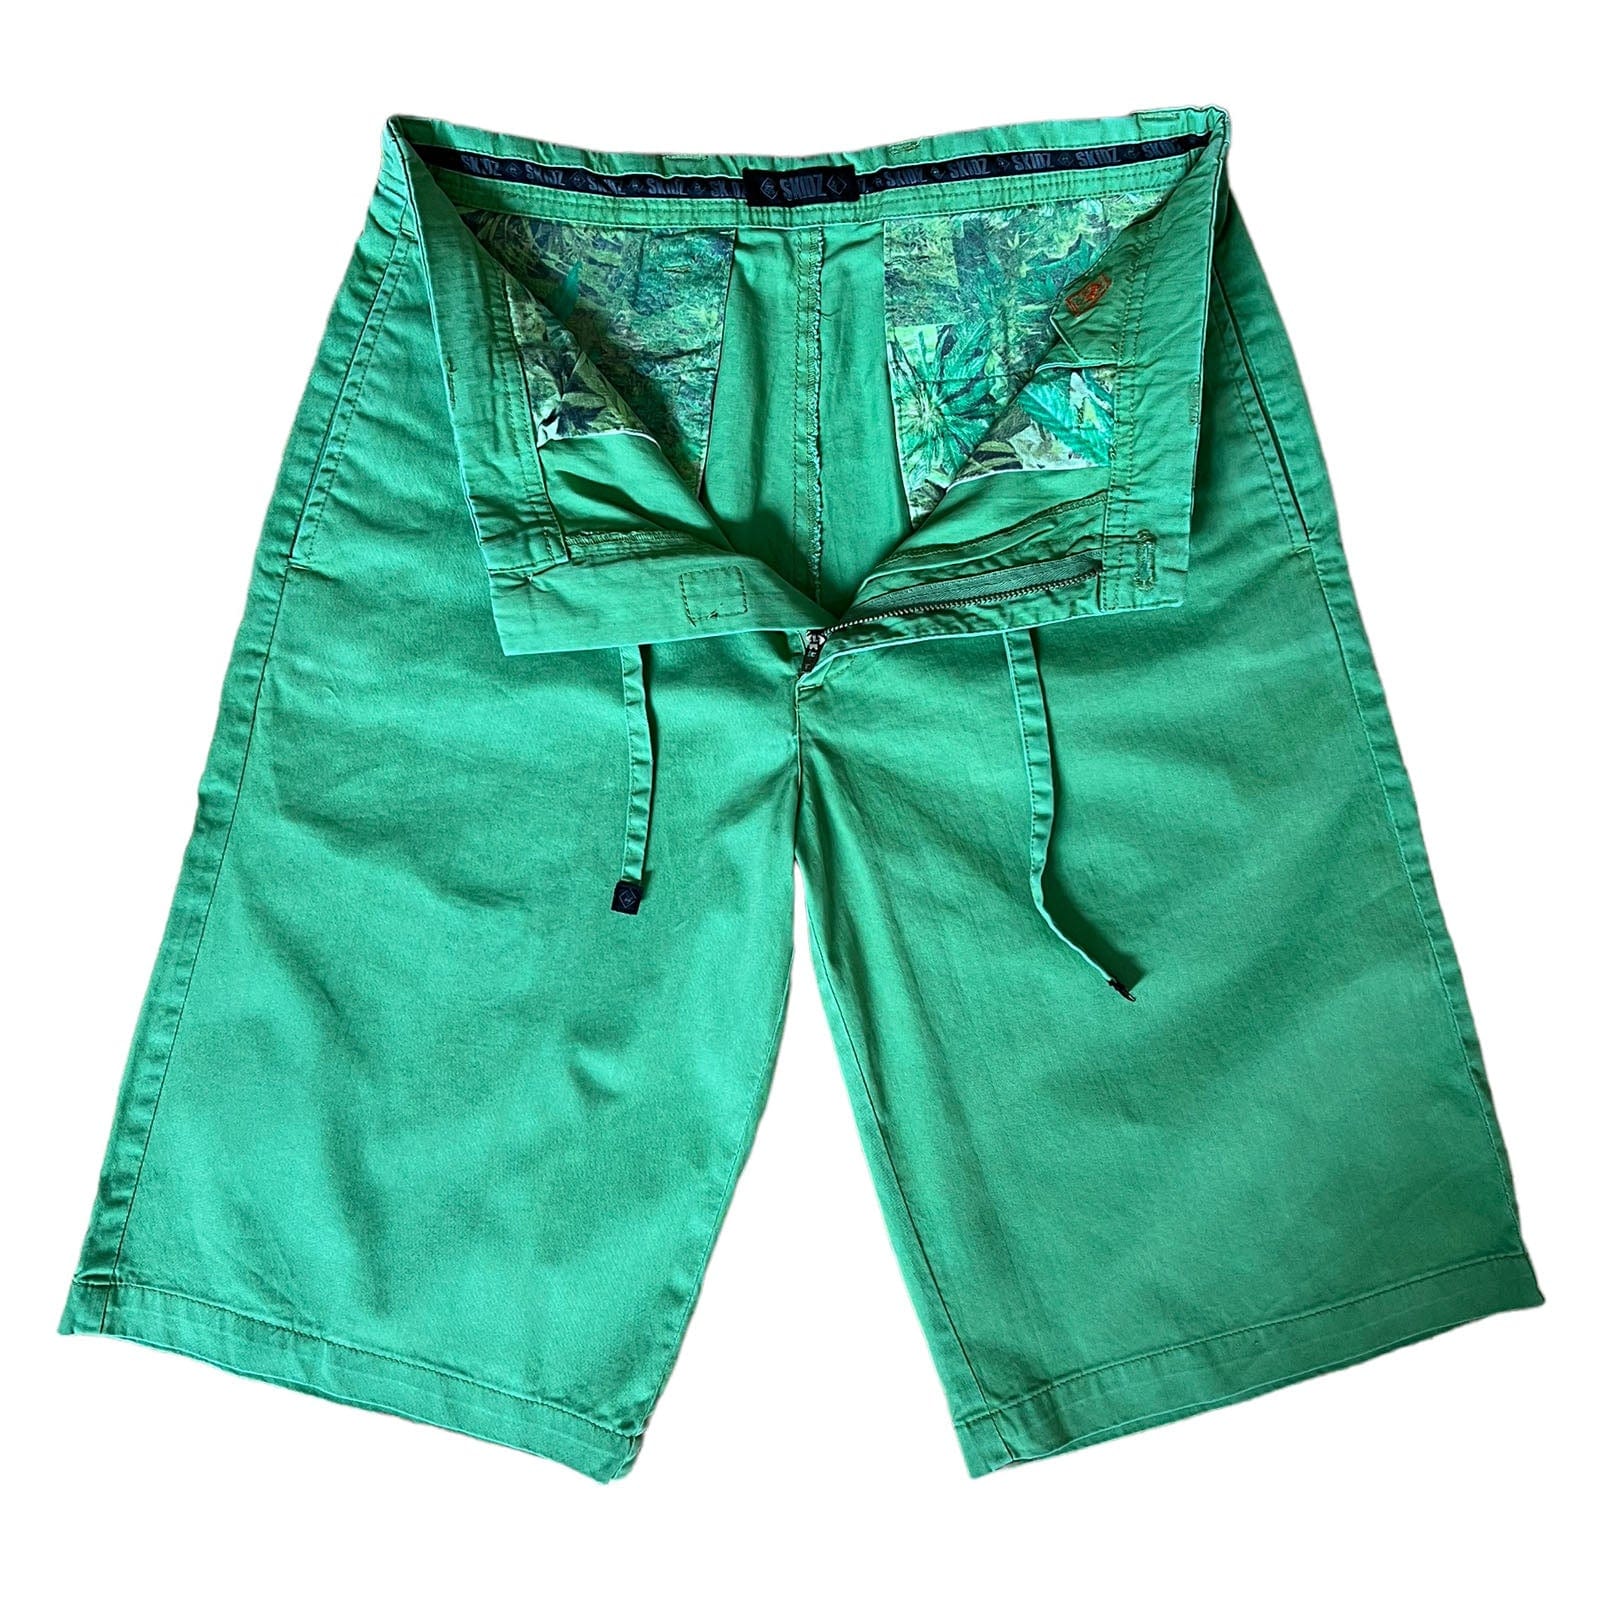 SKIDZ Shorts Canvas Shorts Vol2 - Green